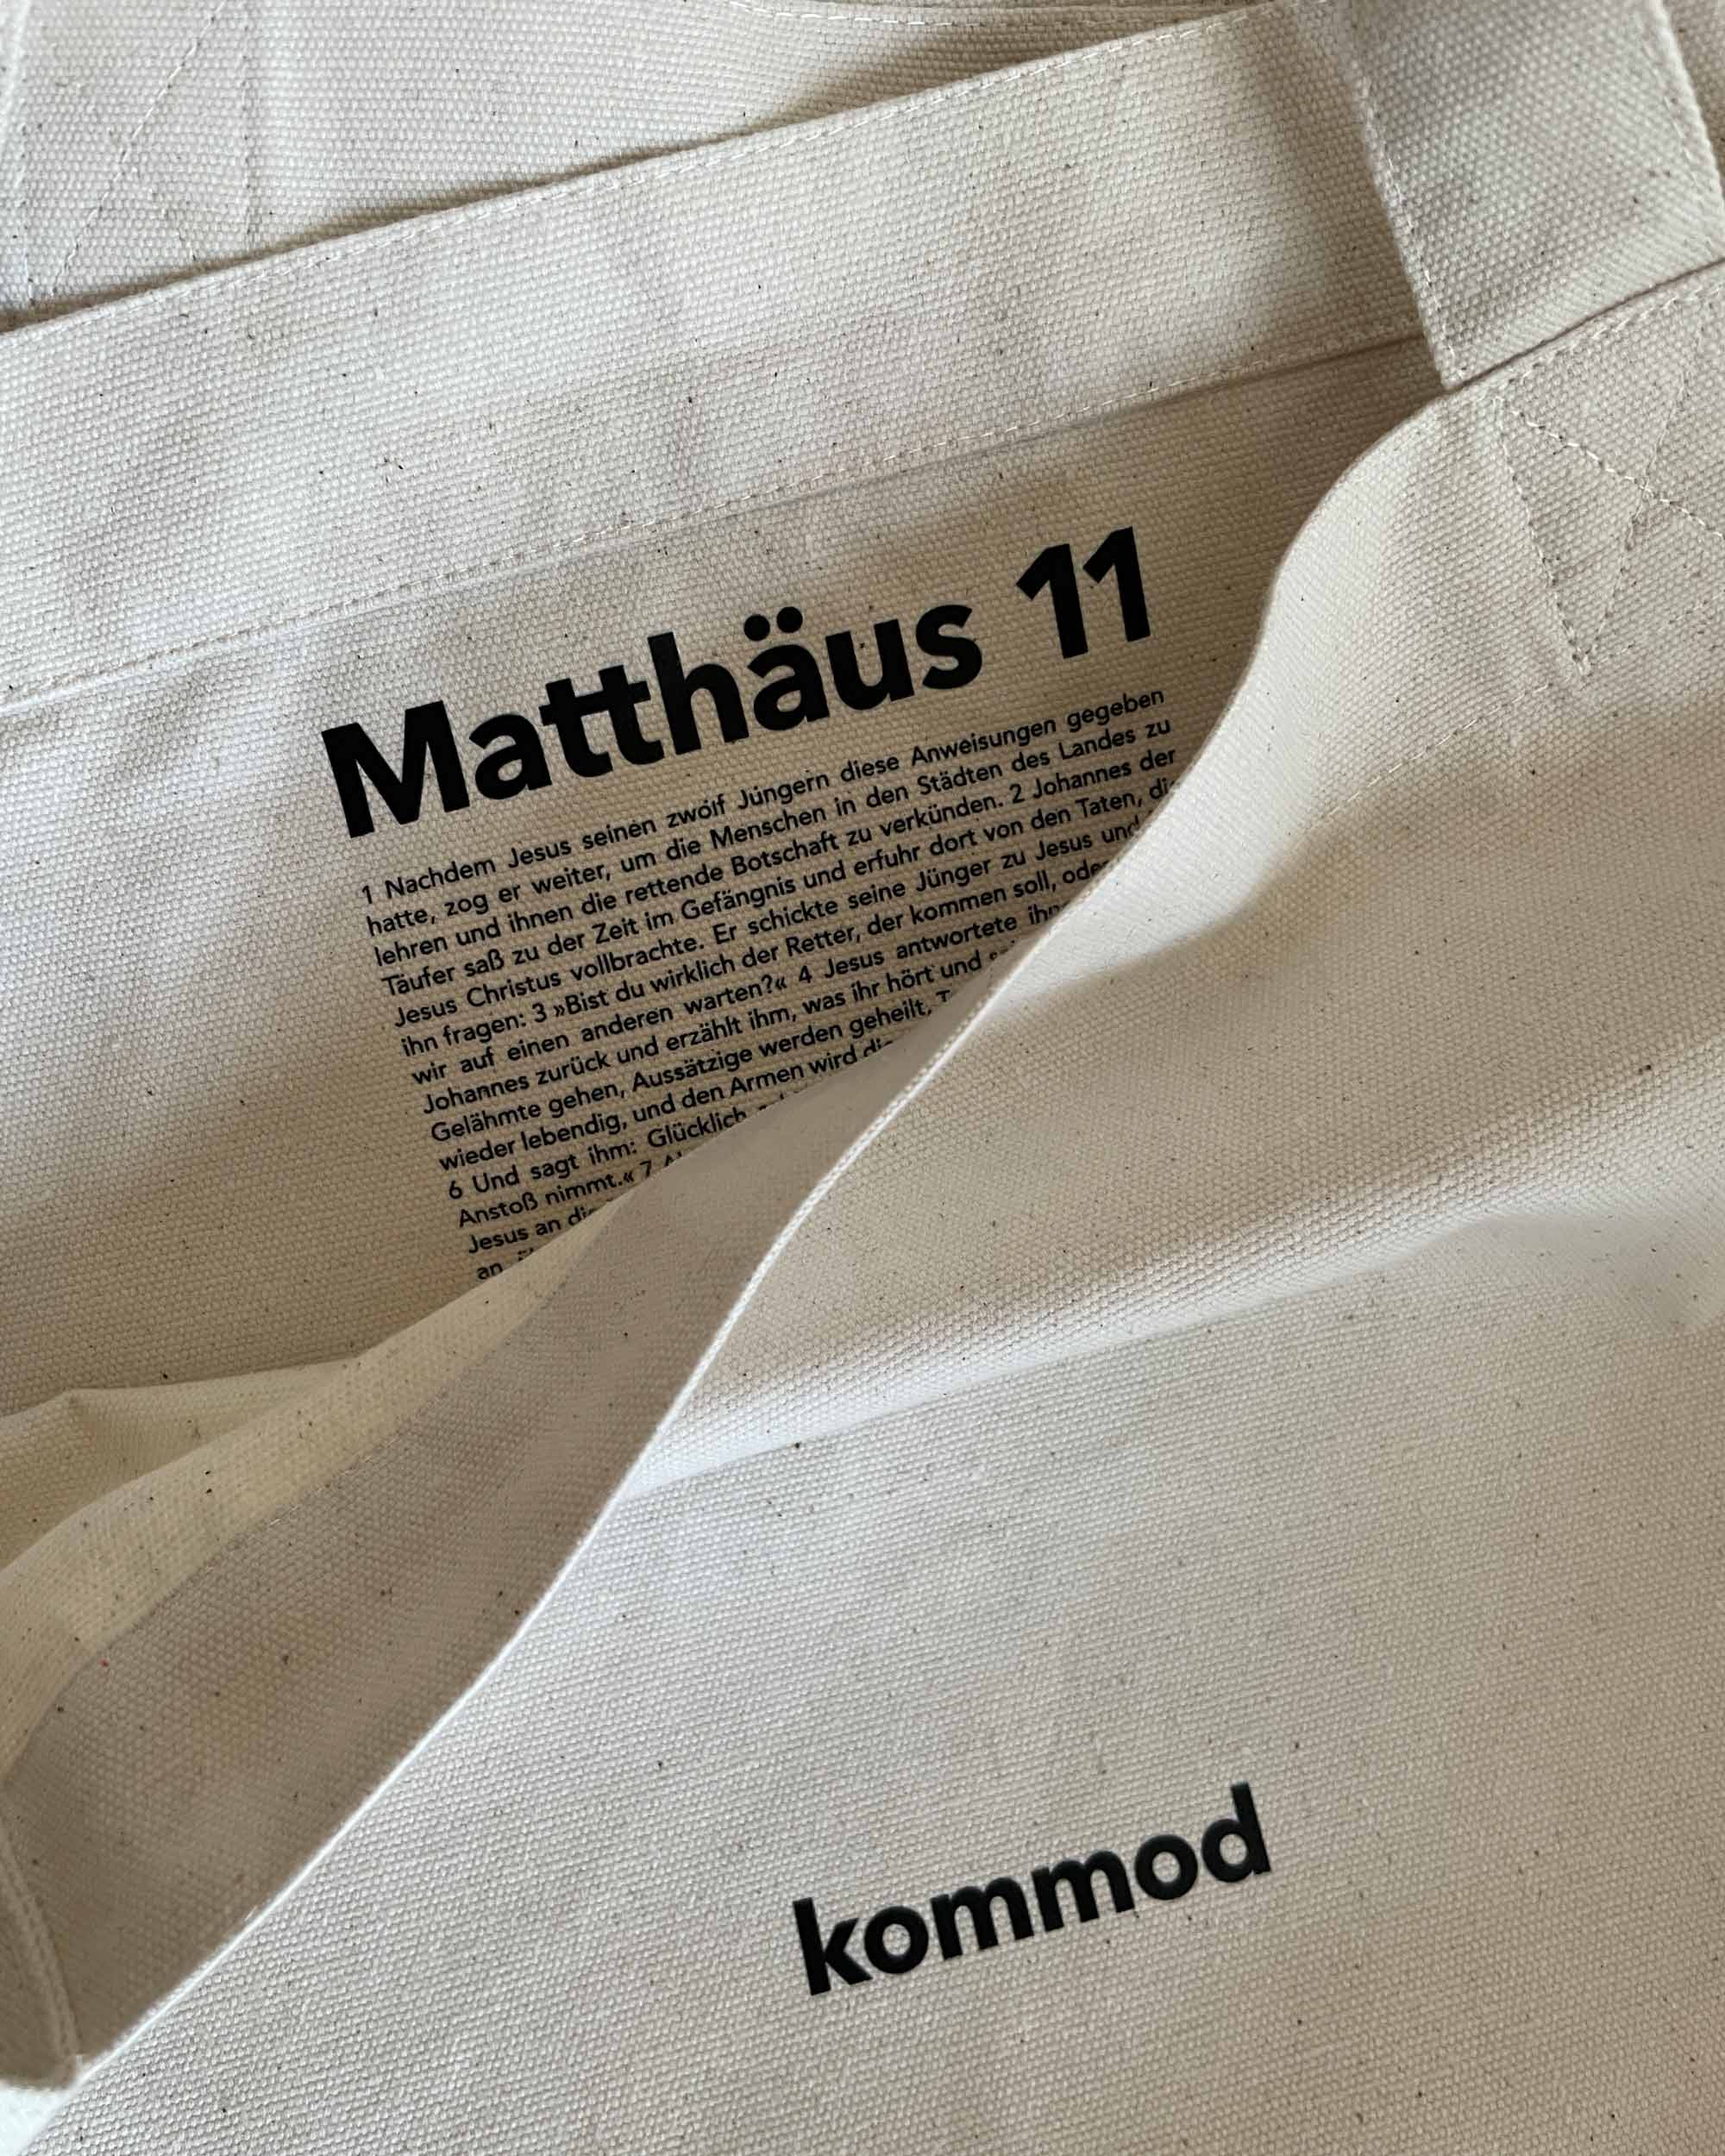 kommod / stofftasche / matthäus 11